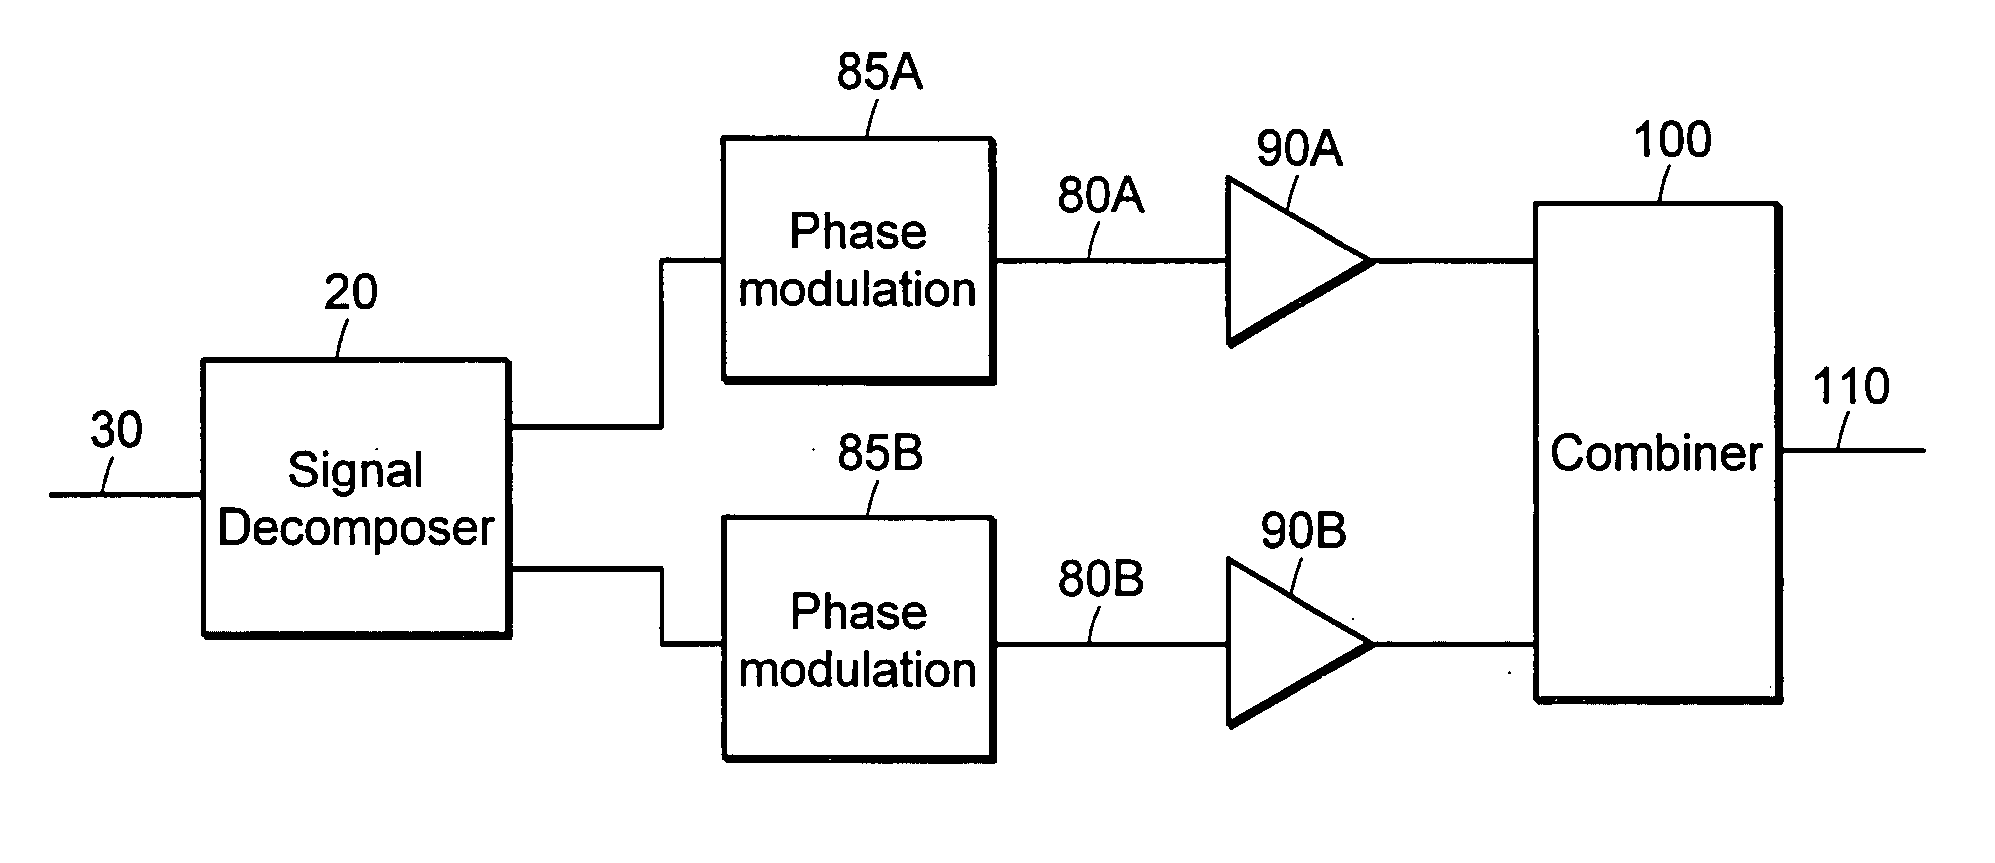 Adaptive predistortion for a transmit system